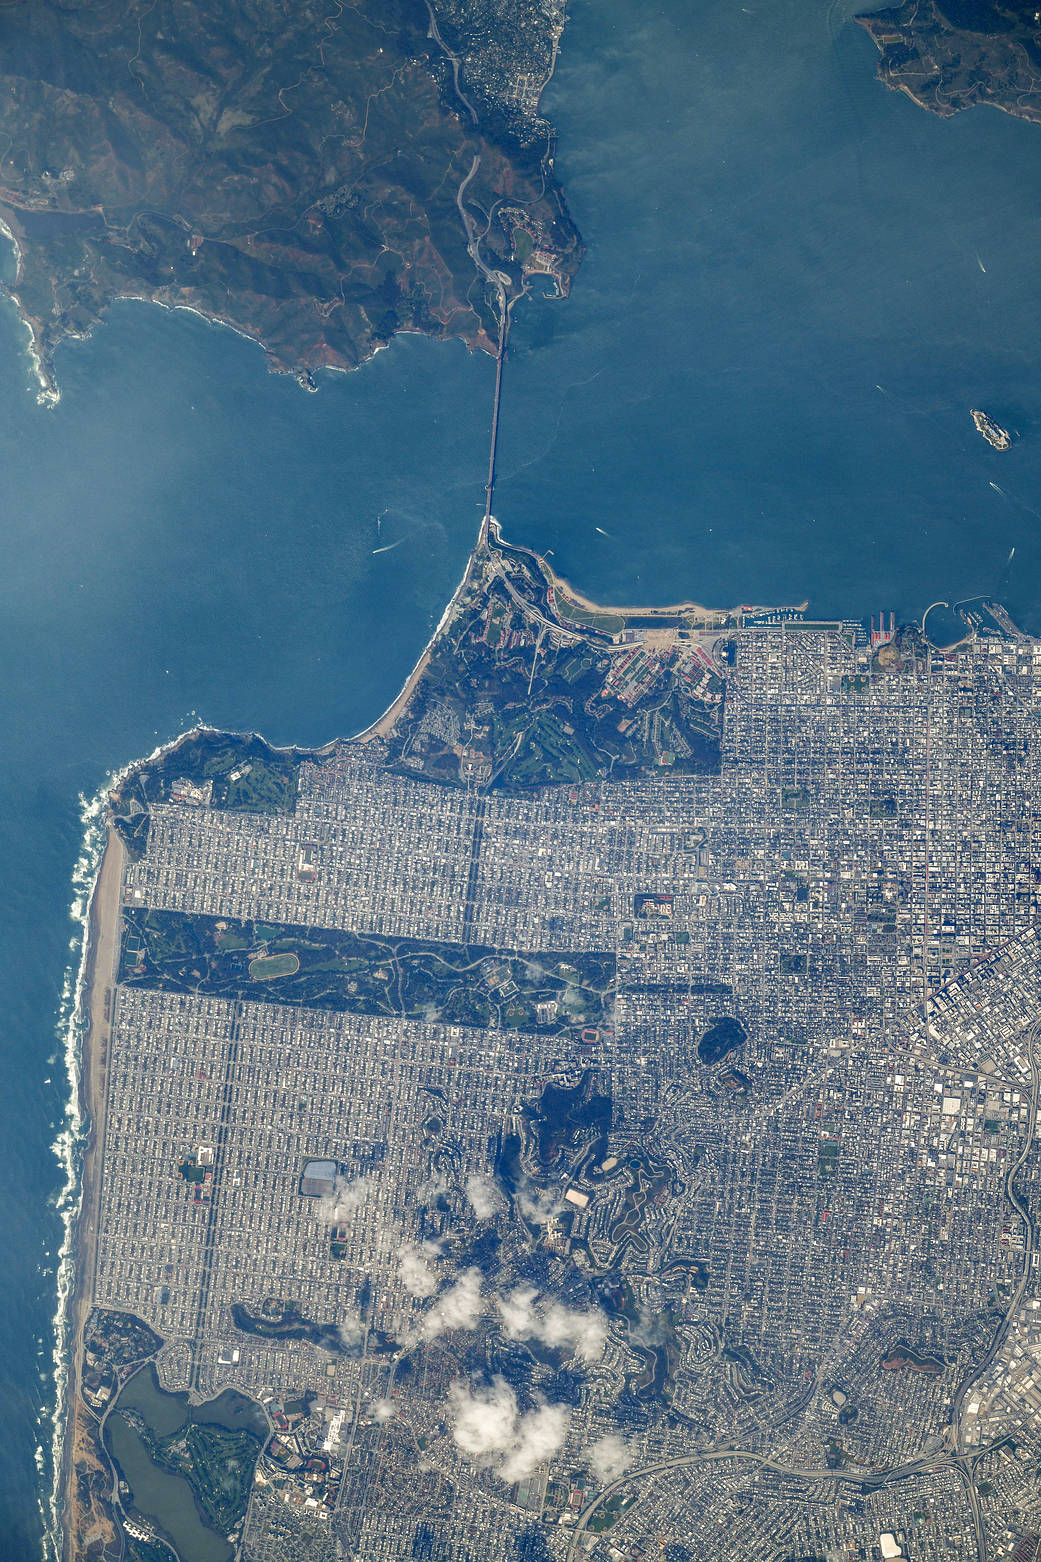 The Golden Gate Bridge and San Francisco